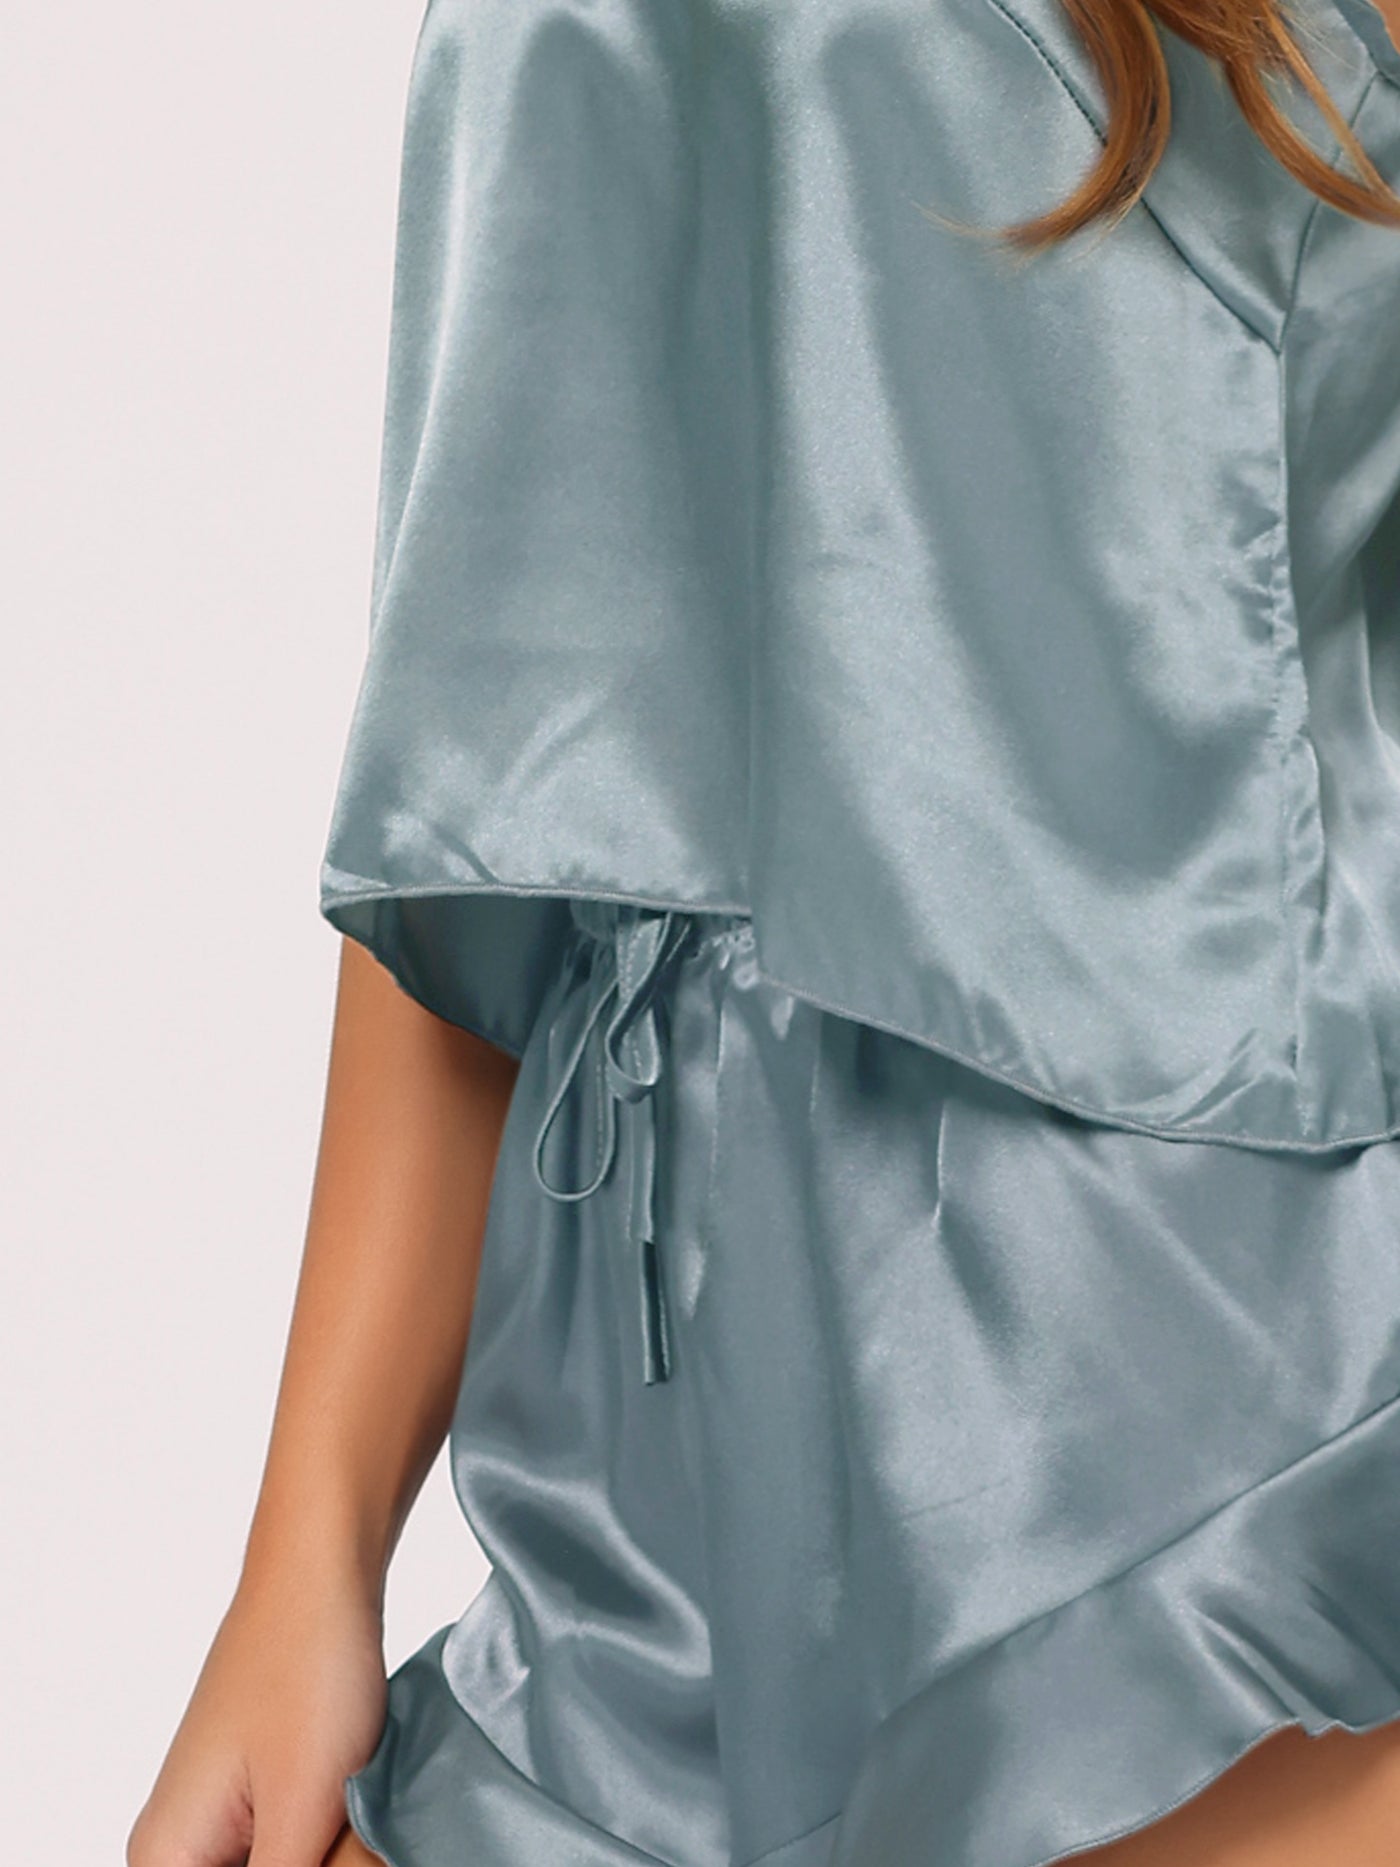 Bublédon Women's Satin Lingerie Cami Tops Shorts Sleepwear Pajamas Sets